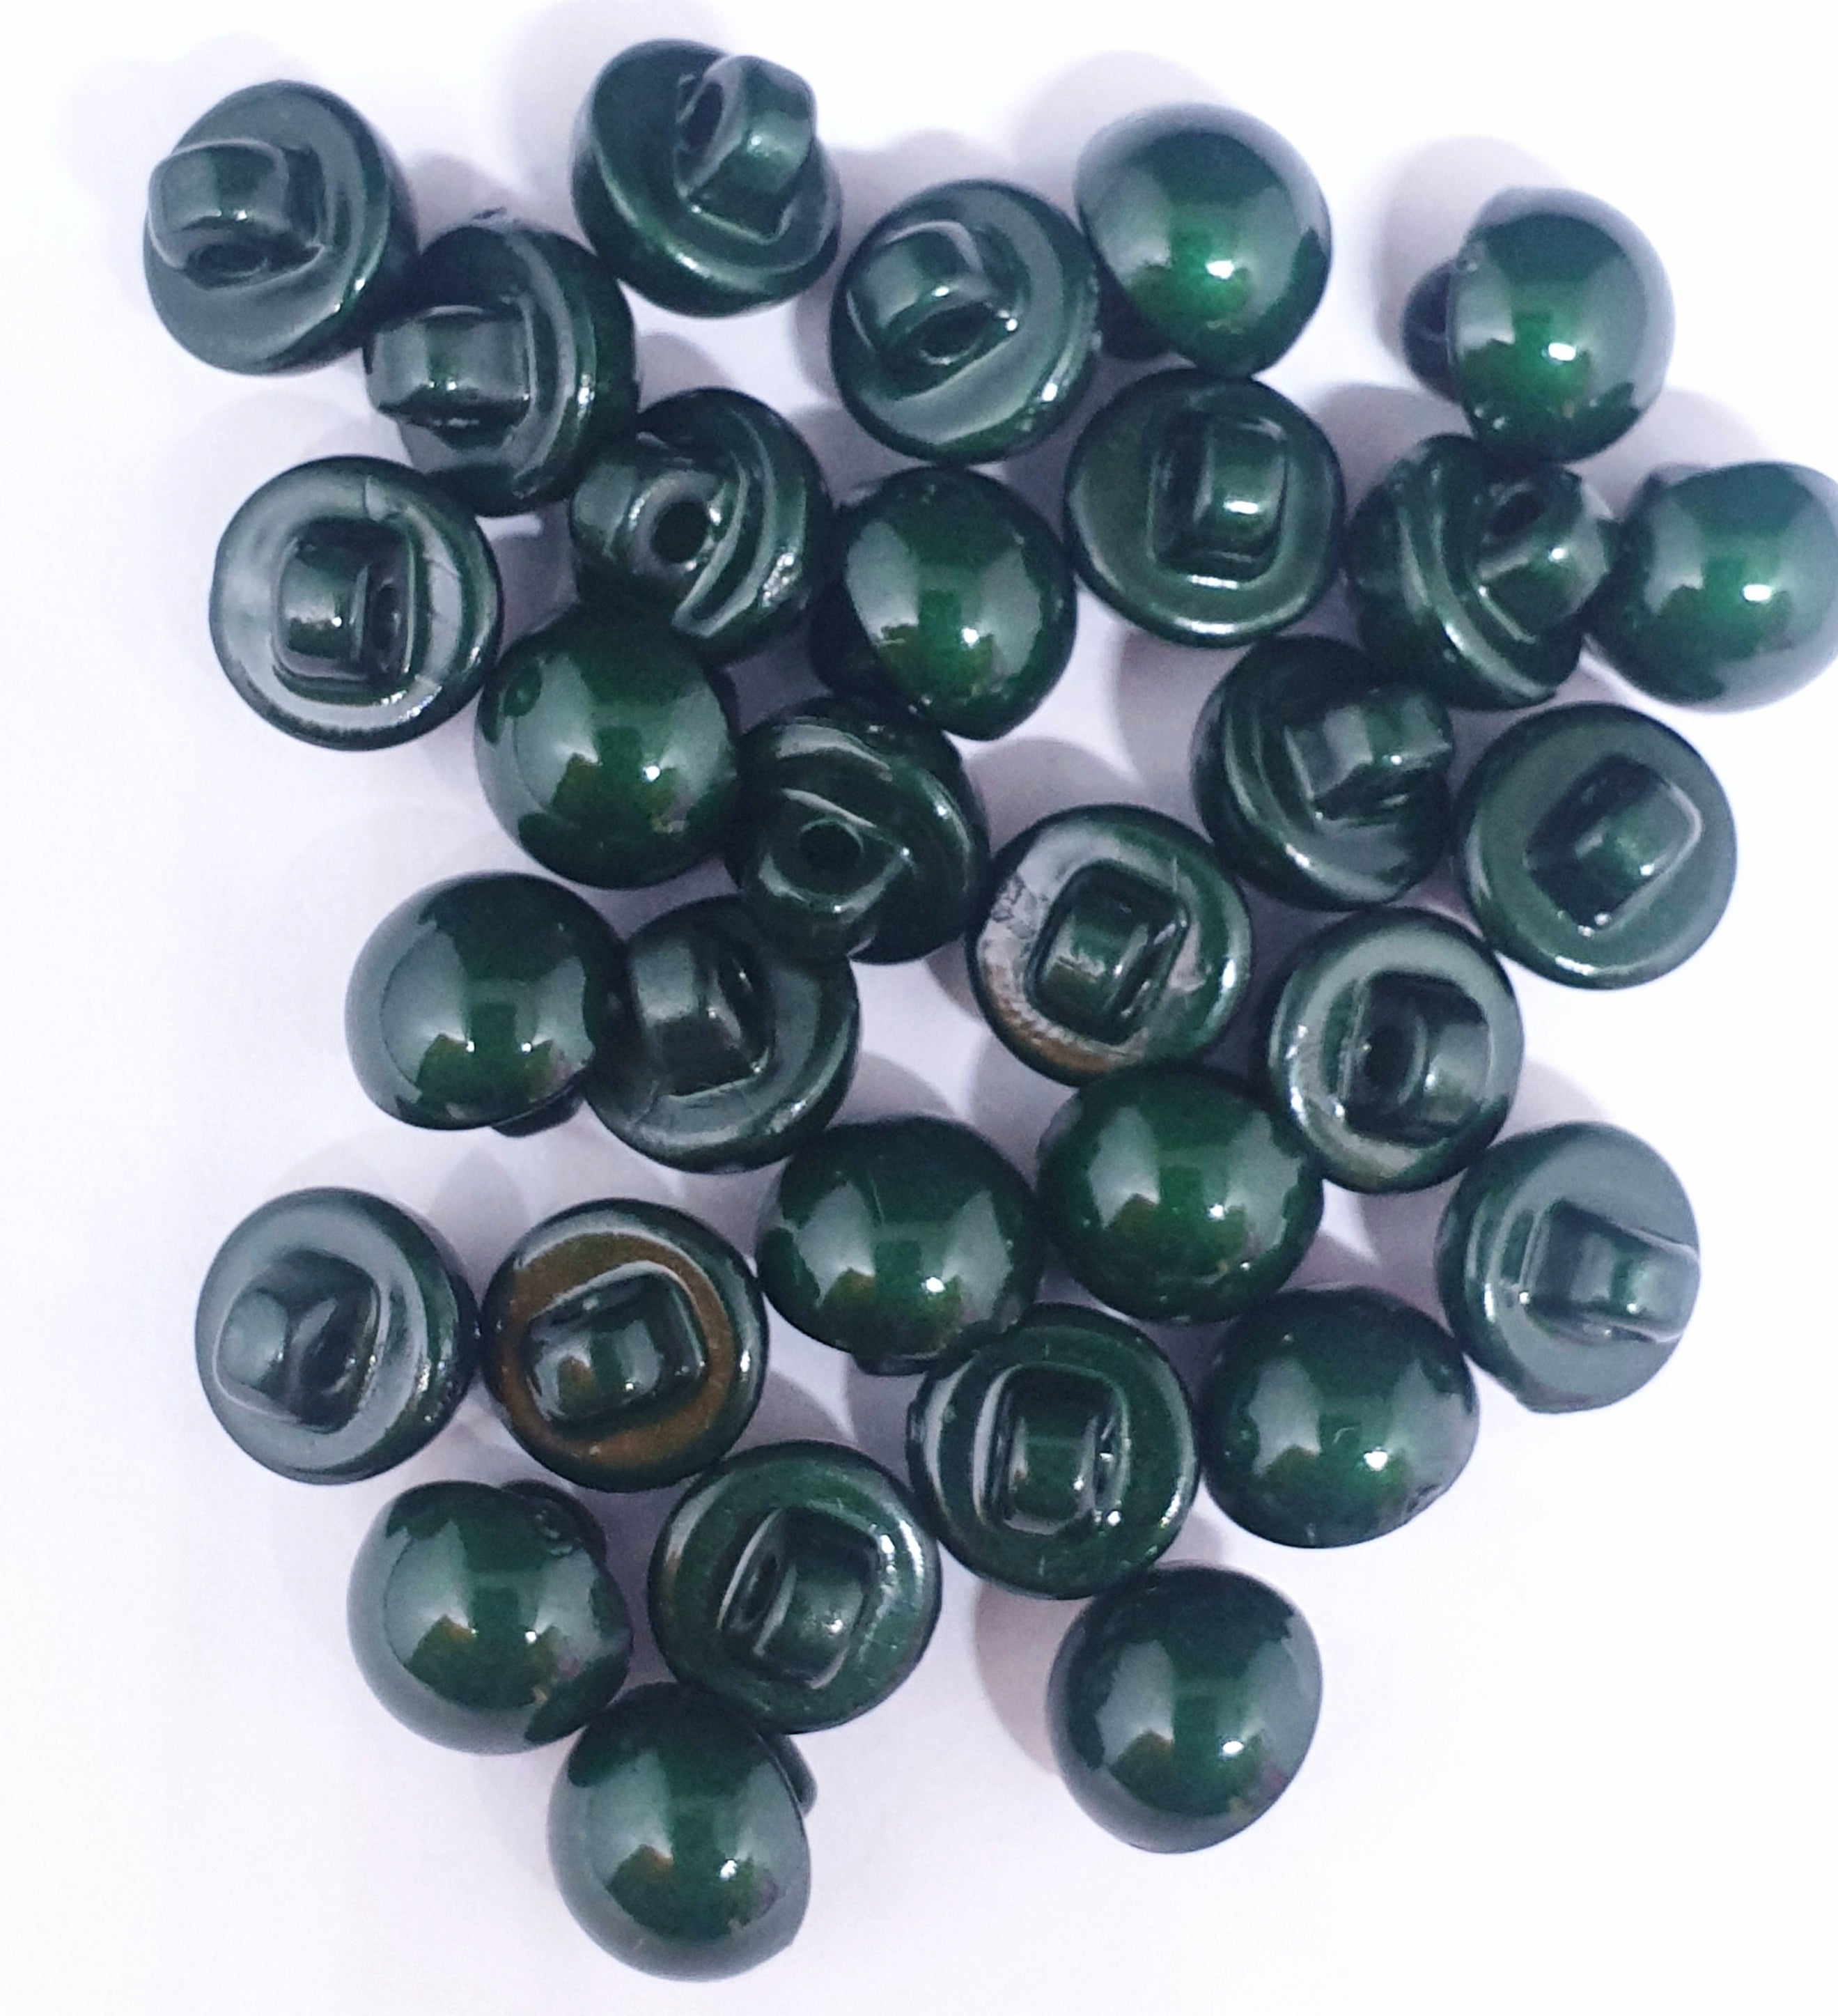 MajorCrafts 30pcs 8mm Dark Green High-Grade Acrylic Small Round Sewing Mushroom Shank Buttons